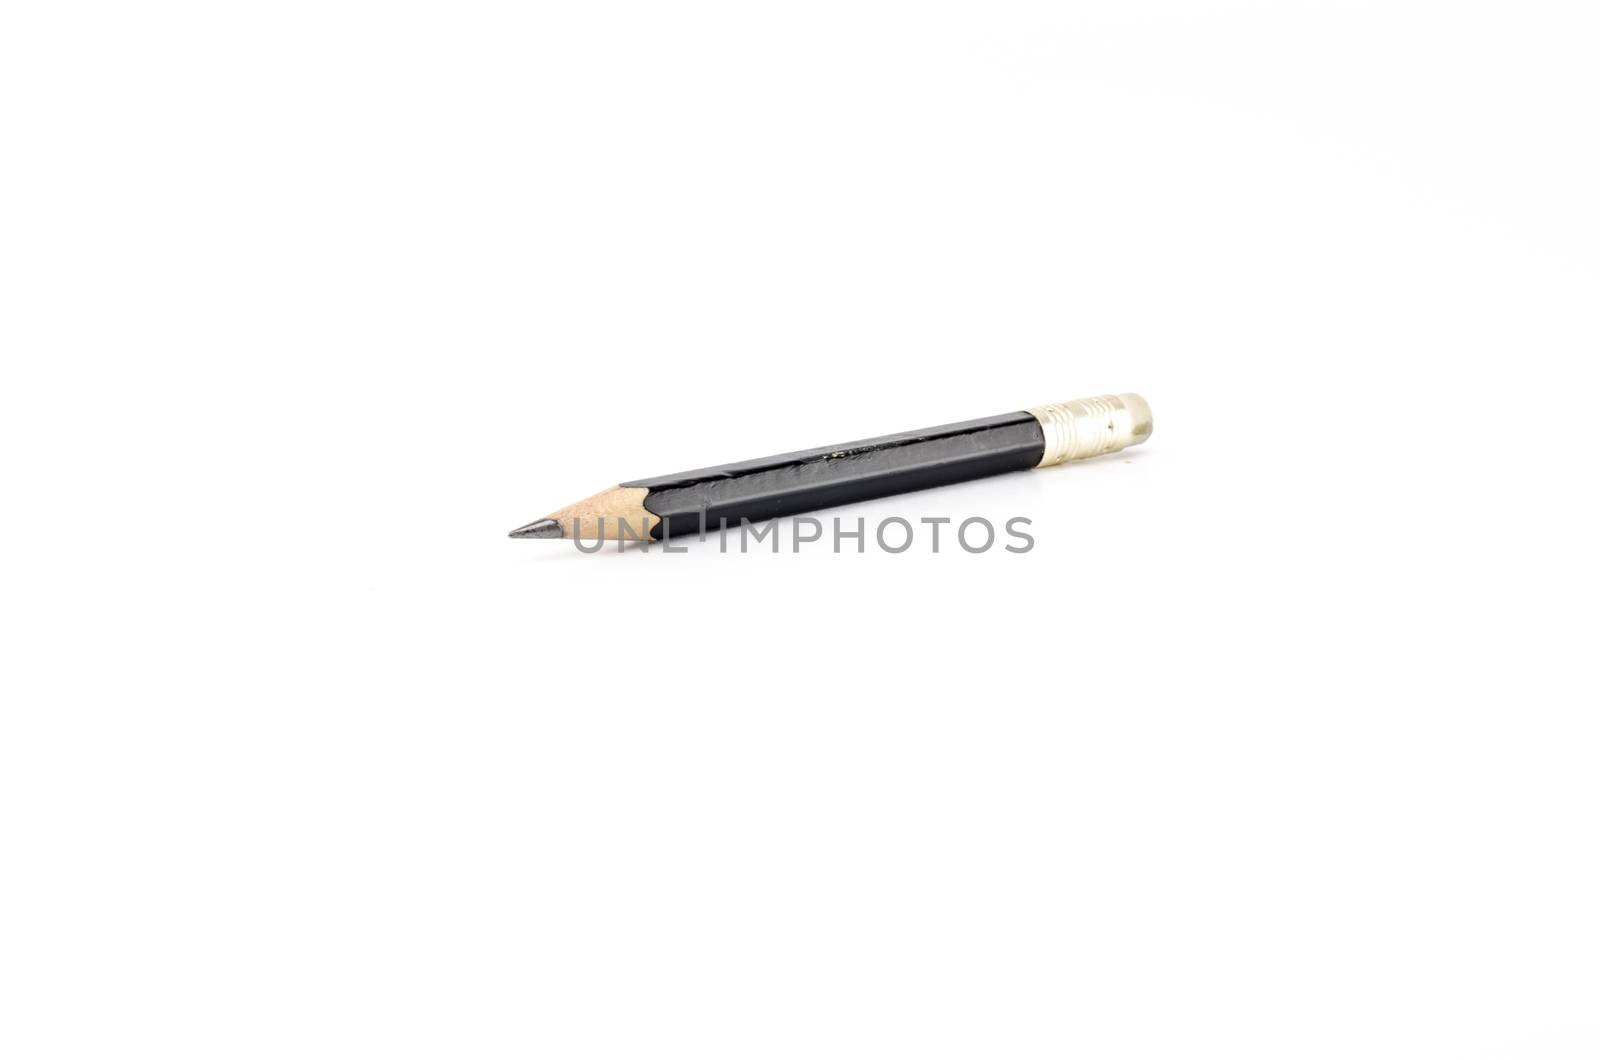 short black pencil isolated on white background